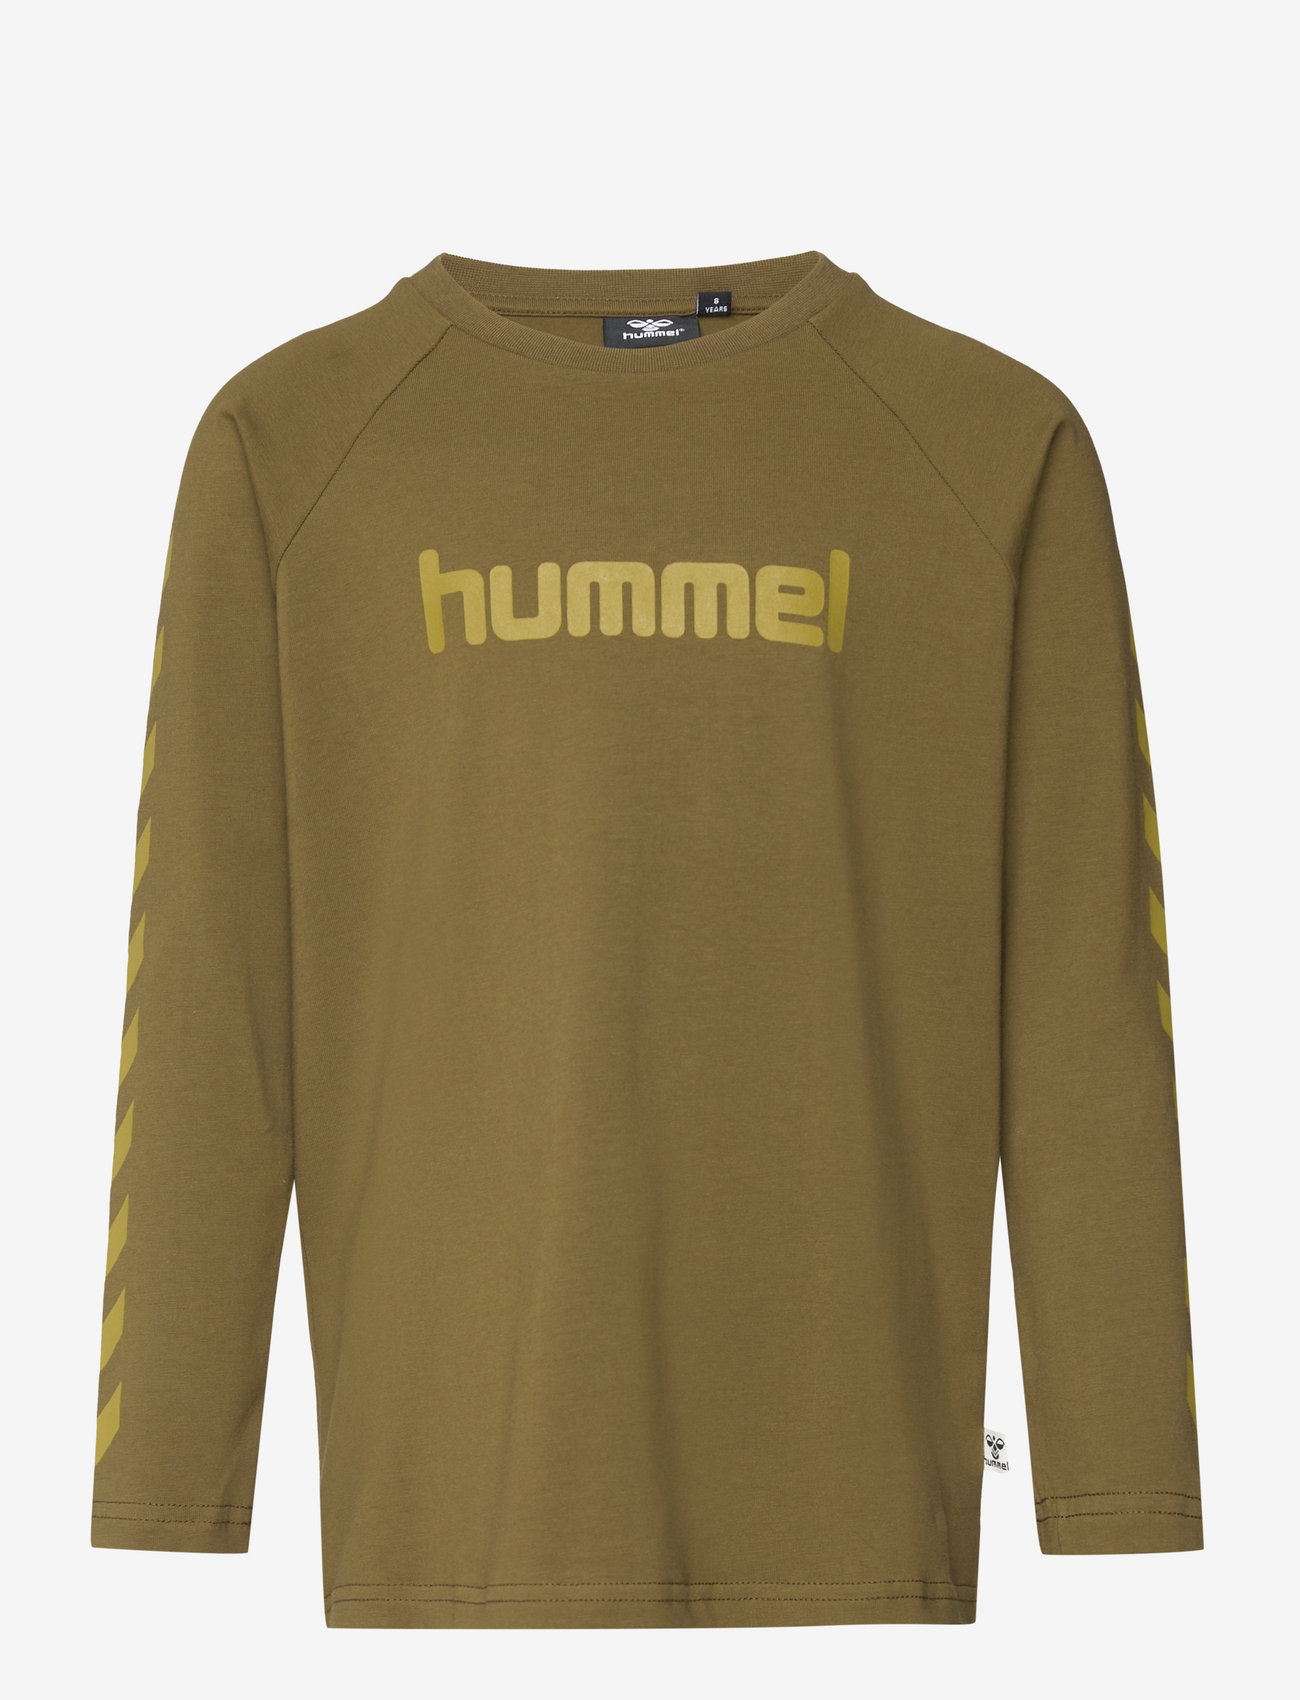 Hummel - hmlBOYS T-SHIRT L/S - pitkähihaiset paidat - green moss - 0